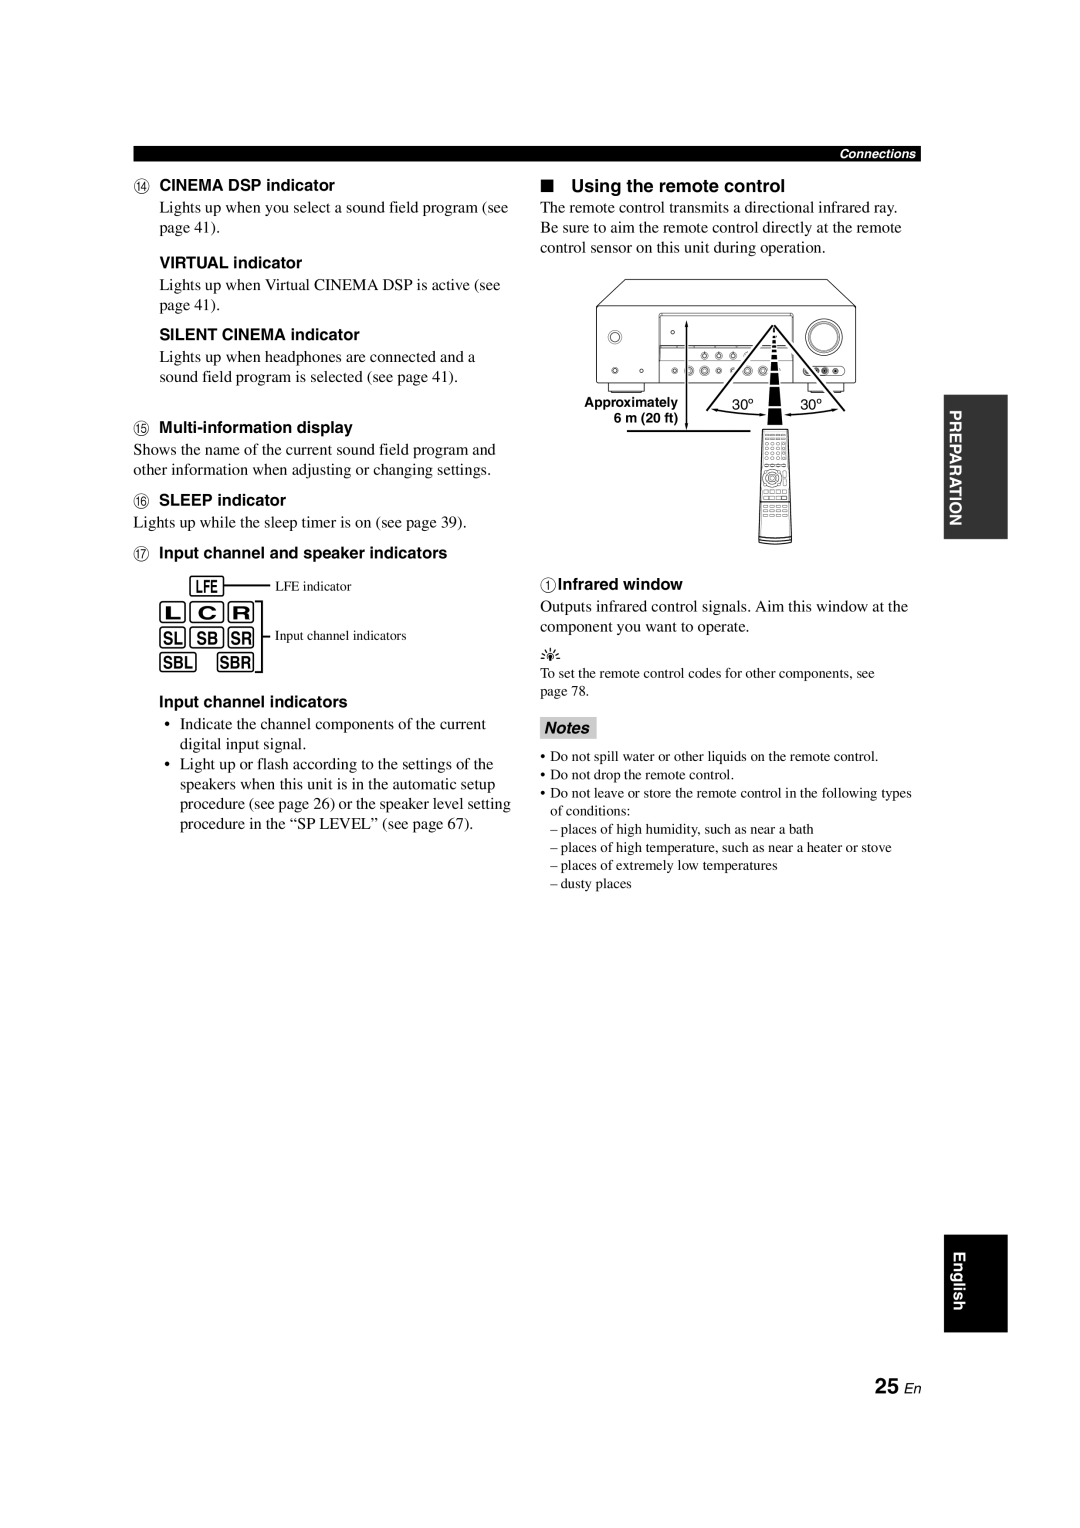 Yamaha HTR-6150 owner manual 25 En, L C R, Sbl Sbr, Using the remote control, Notes 